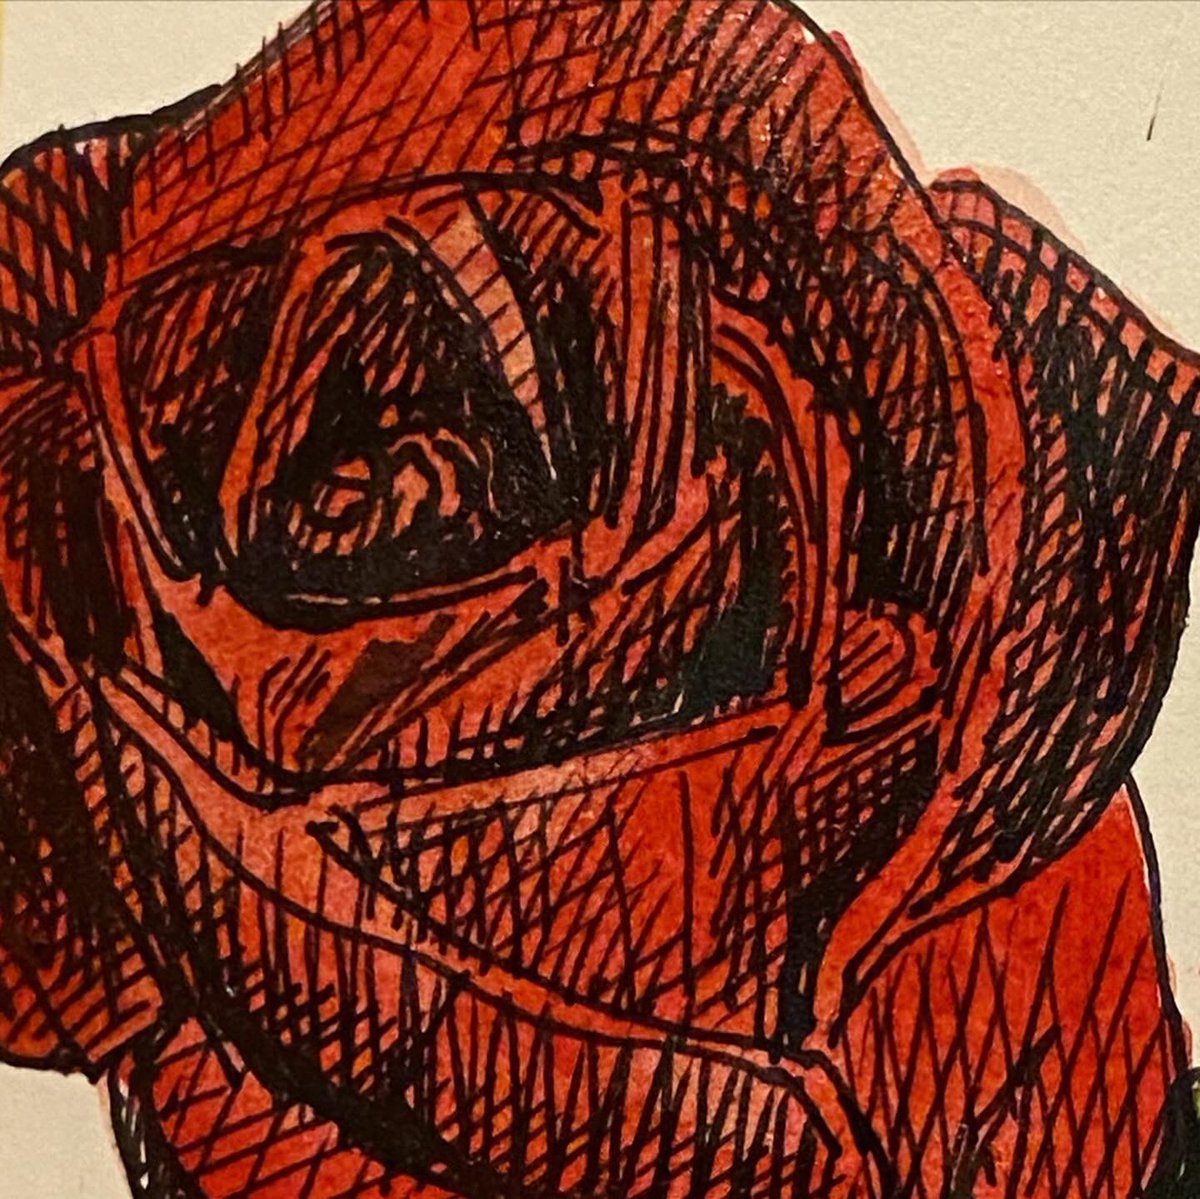 My love is like a red red rose. It had to be a red rose tonight for Robert Burns who was born on this date in 1759. #100flowersin100Days #floralart #100dayproject #createeveryday #lookatthedetails #burnsnight #robertburns #robertburnsnight